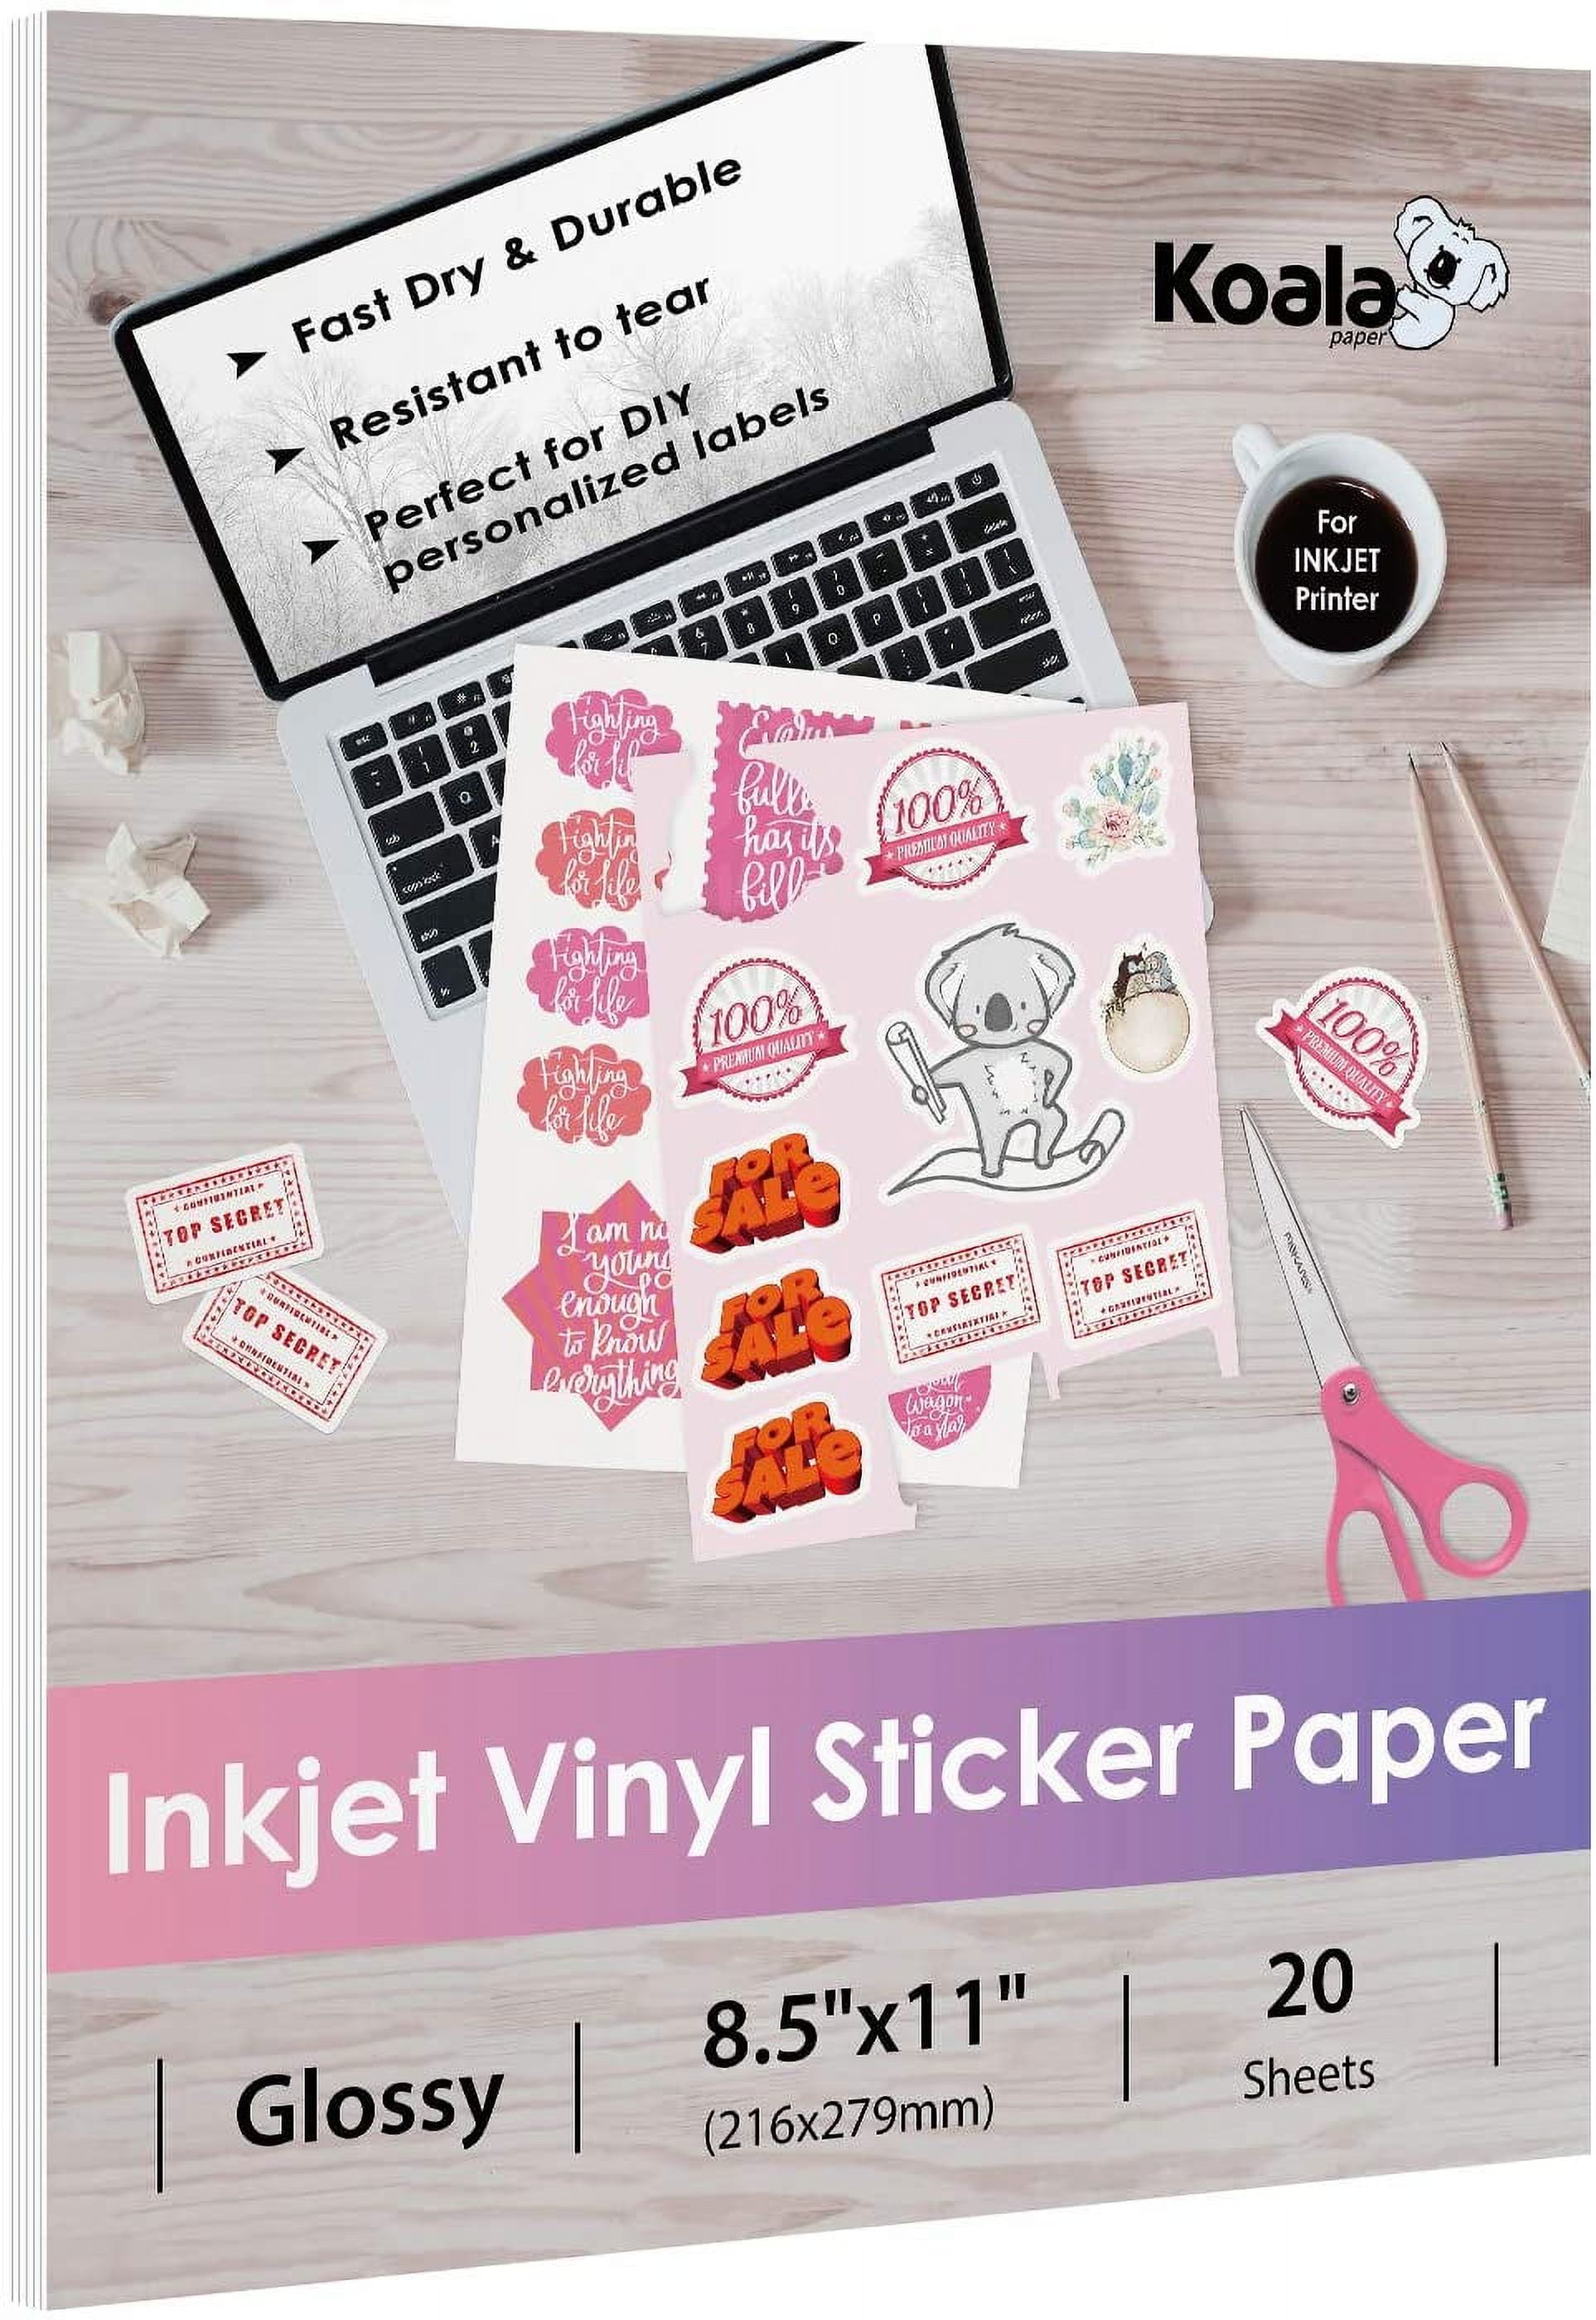 Koala Printable Vinyl Sticker Paper for Inkjet Printers 20 Sheets Glossy  White Waterproof Printable Sticker Paper 8.5x11 Inch, Tear-Resistant